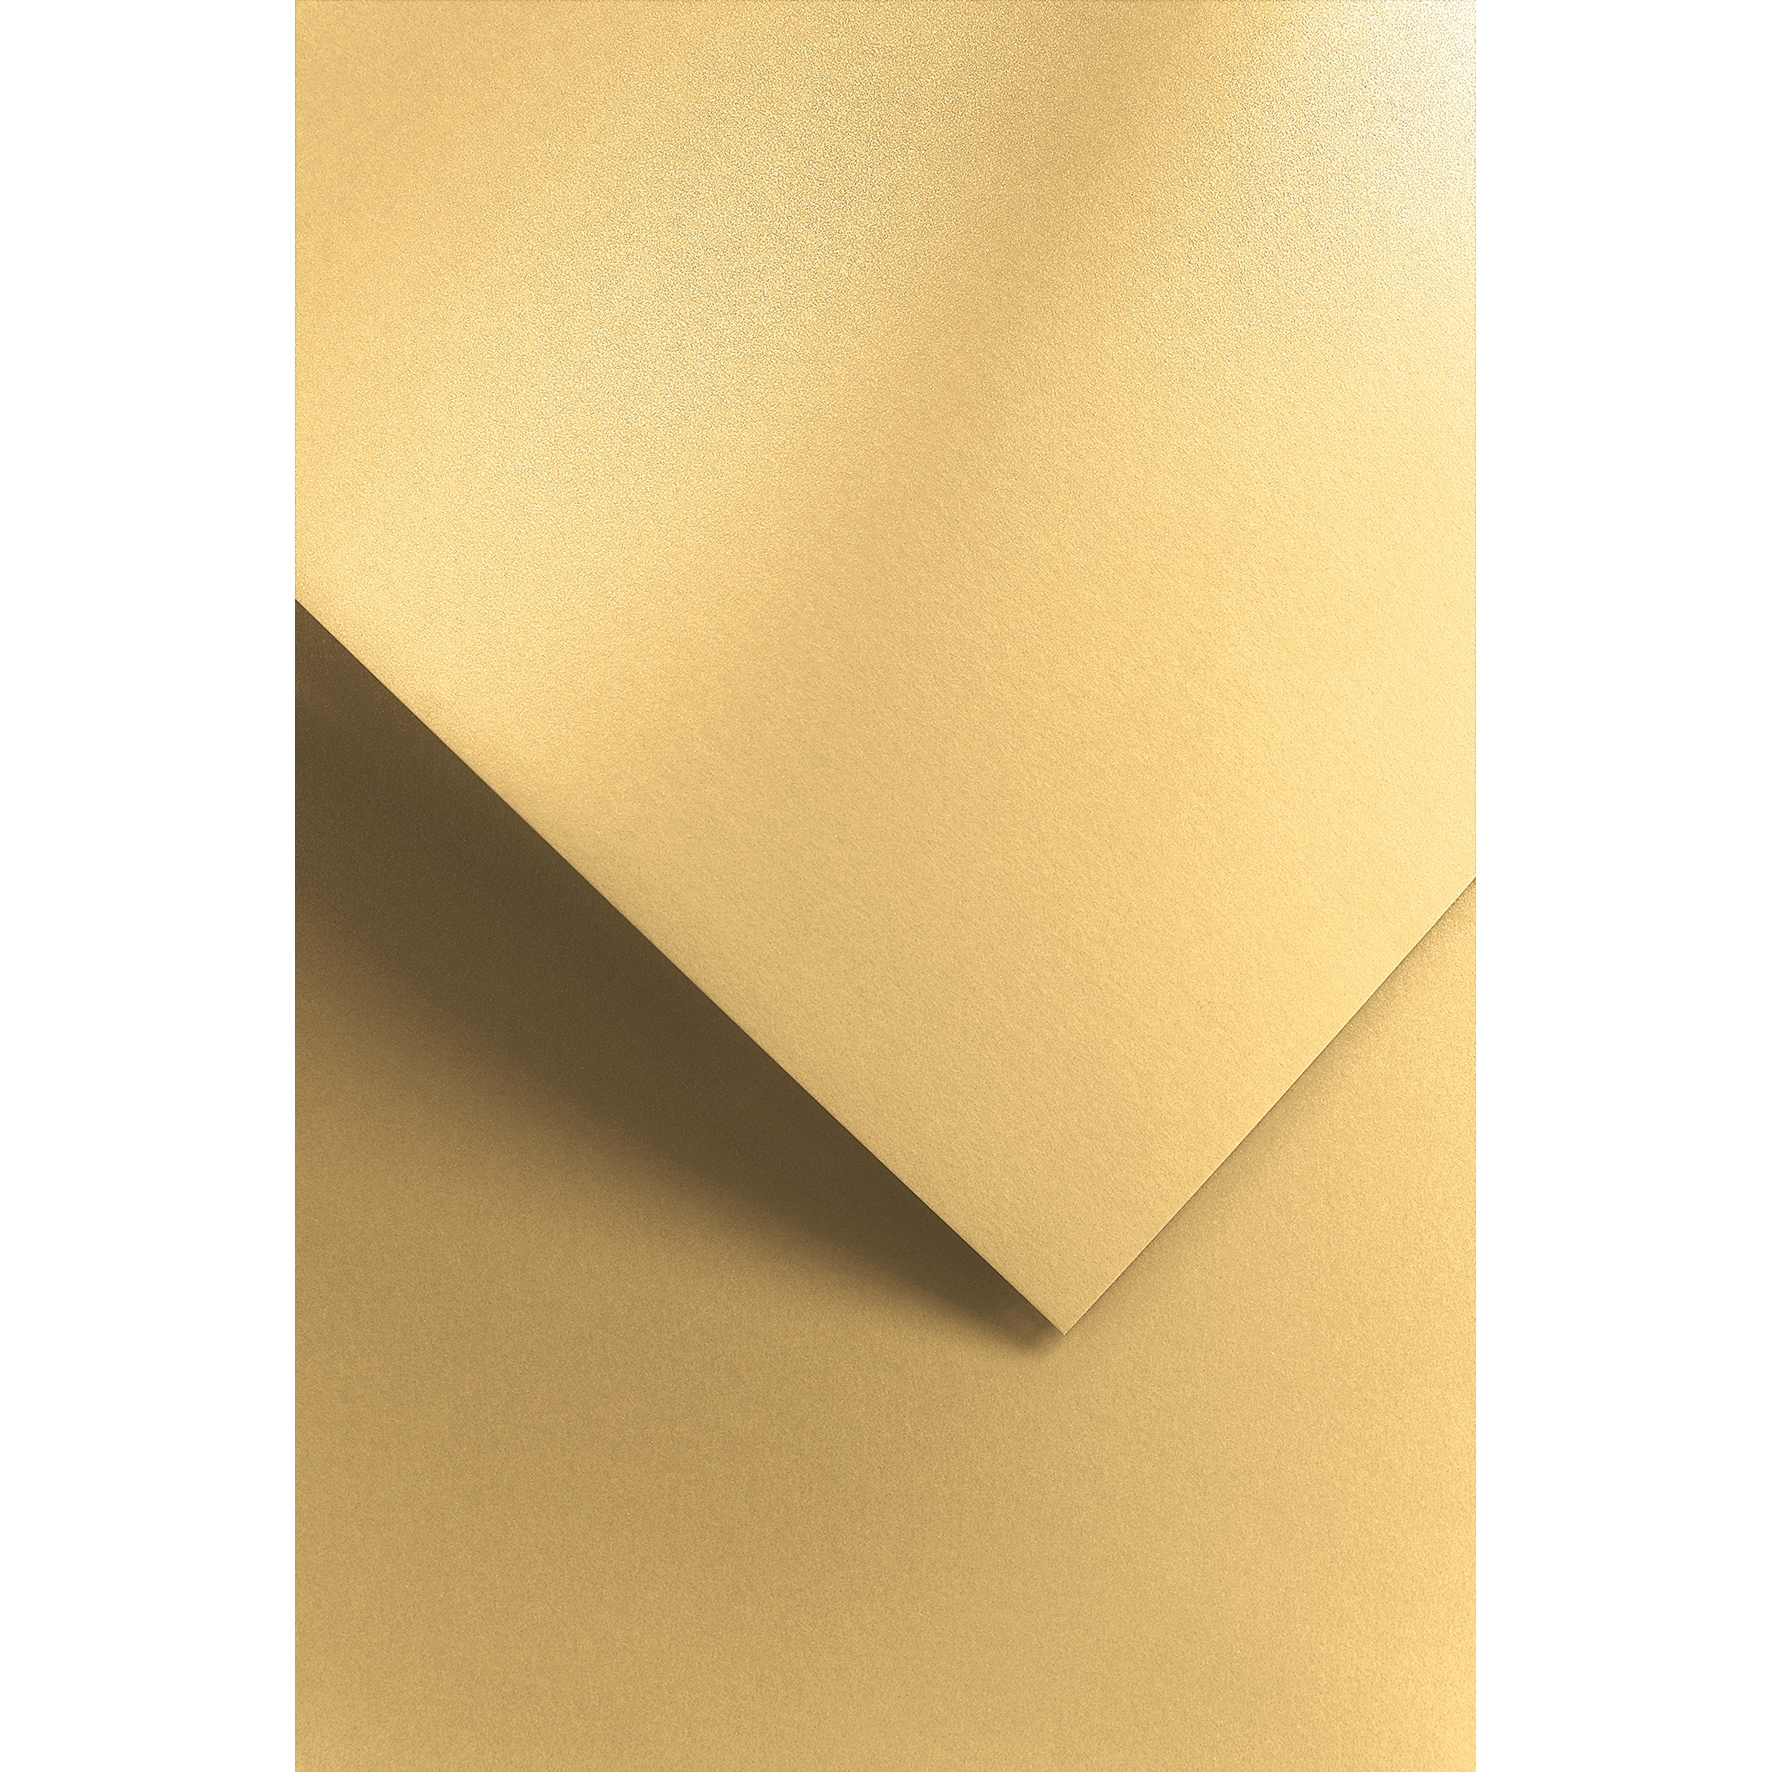 Ozdobný papír Pearl zlatá 250g, 20ks